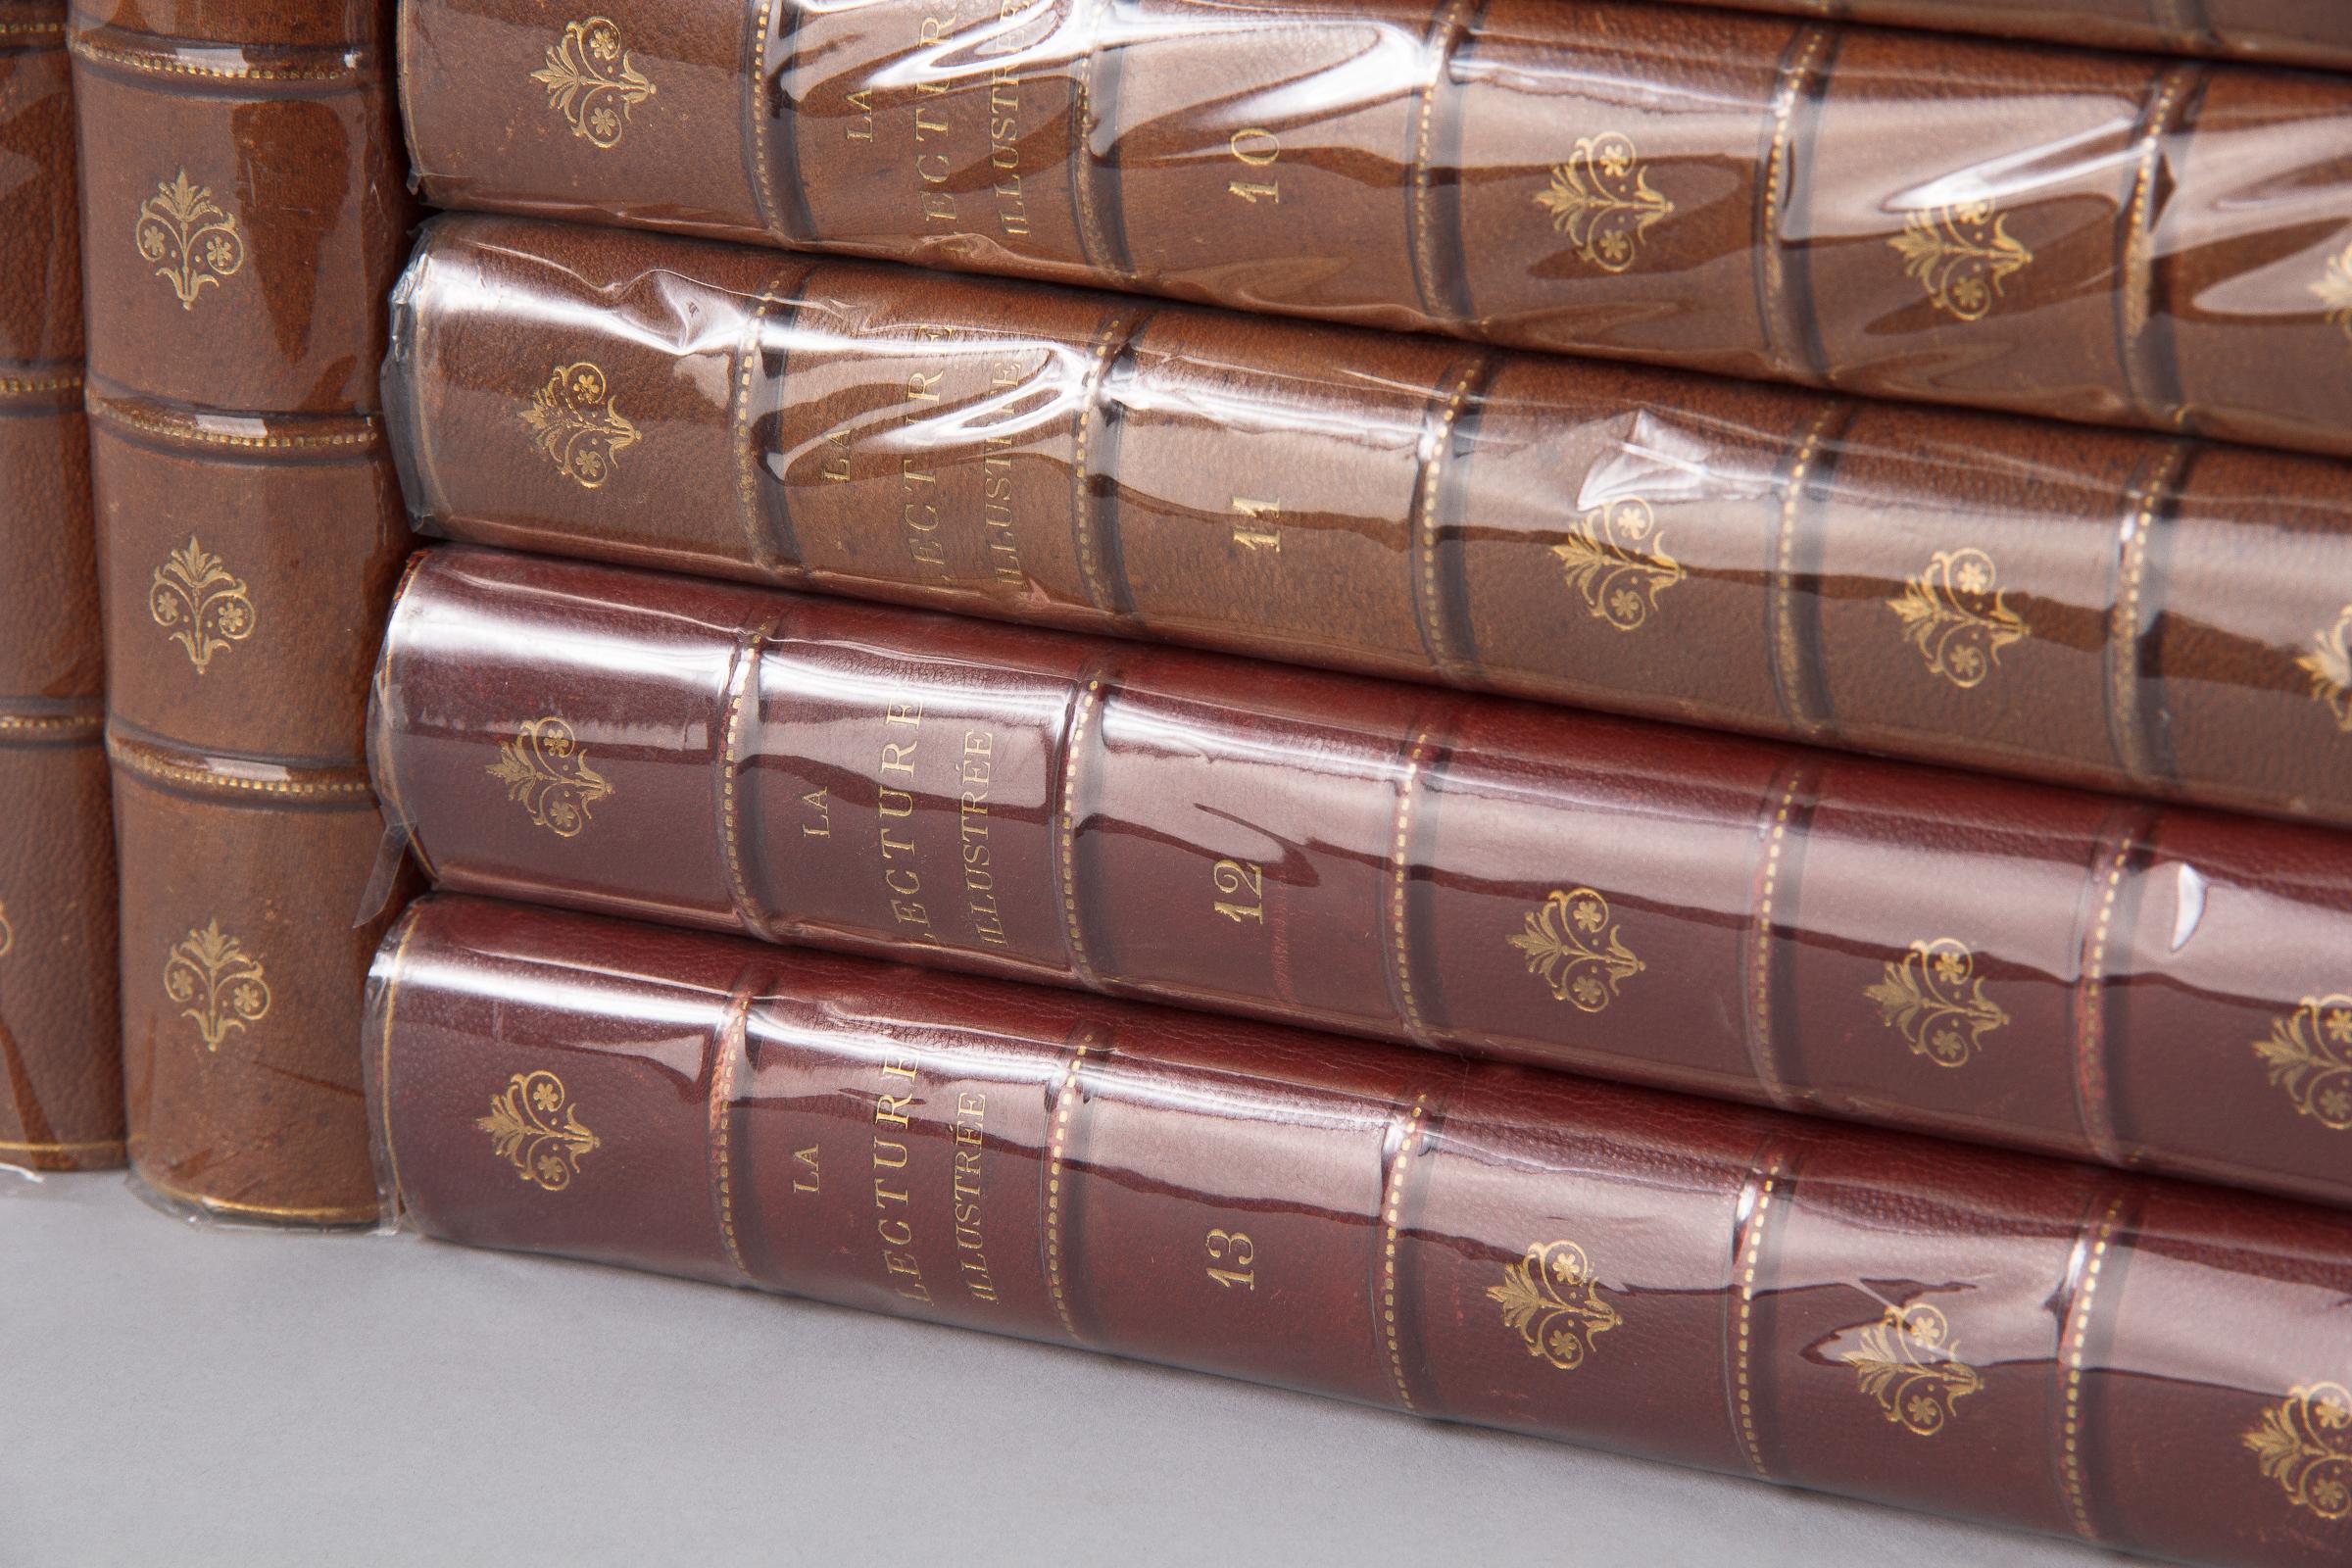 Leather Bound French Books-La Lecture Illustree, Late 1800s 1